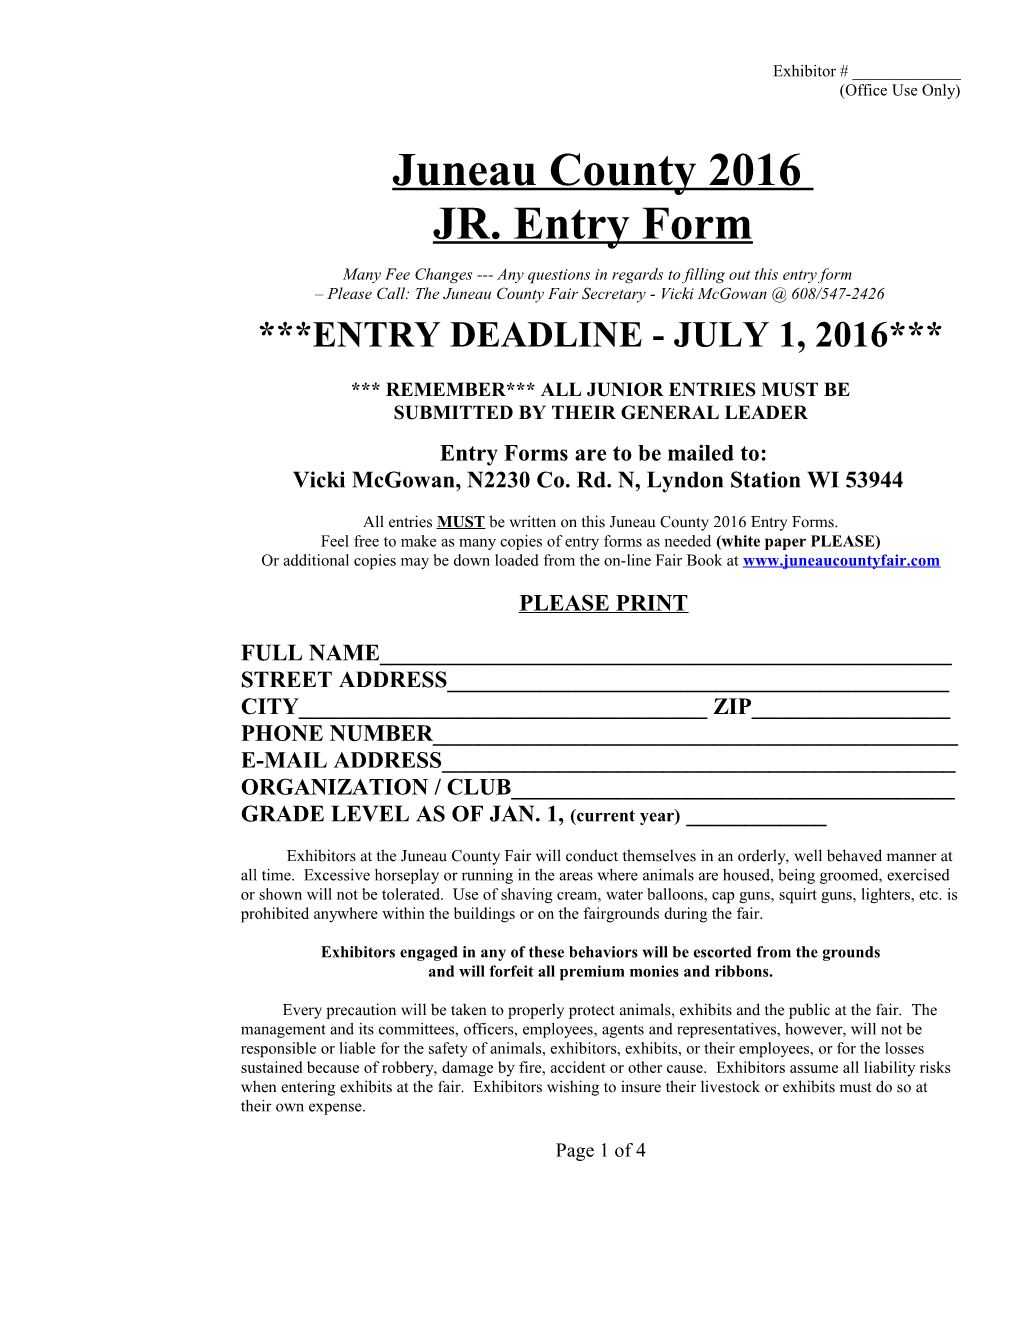 Juneau County 2016